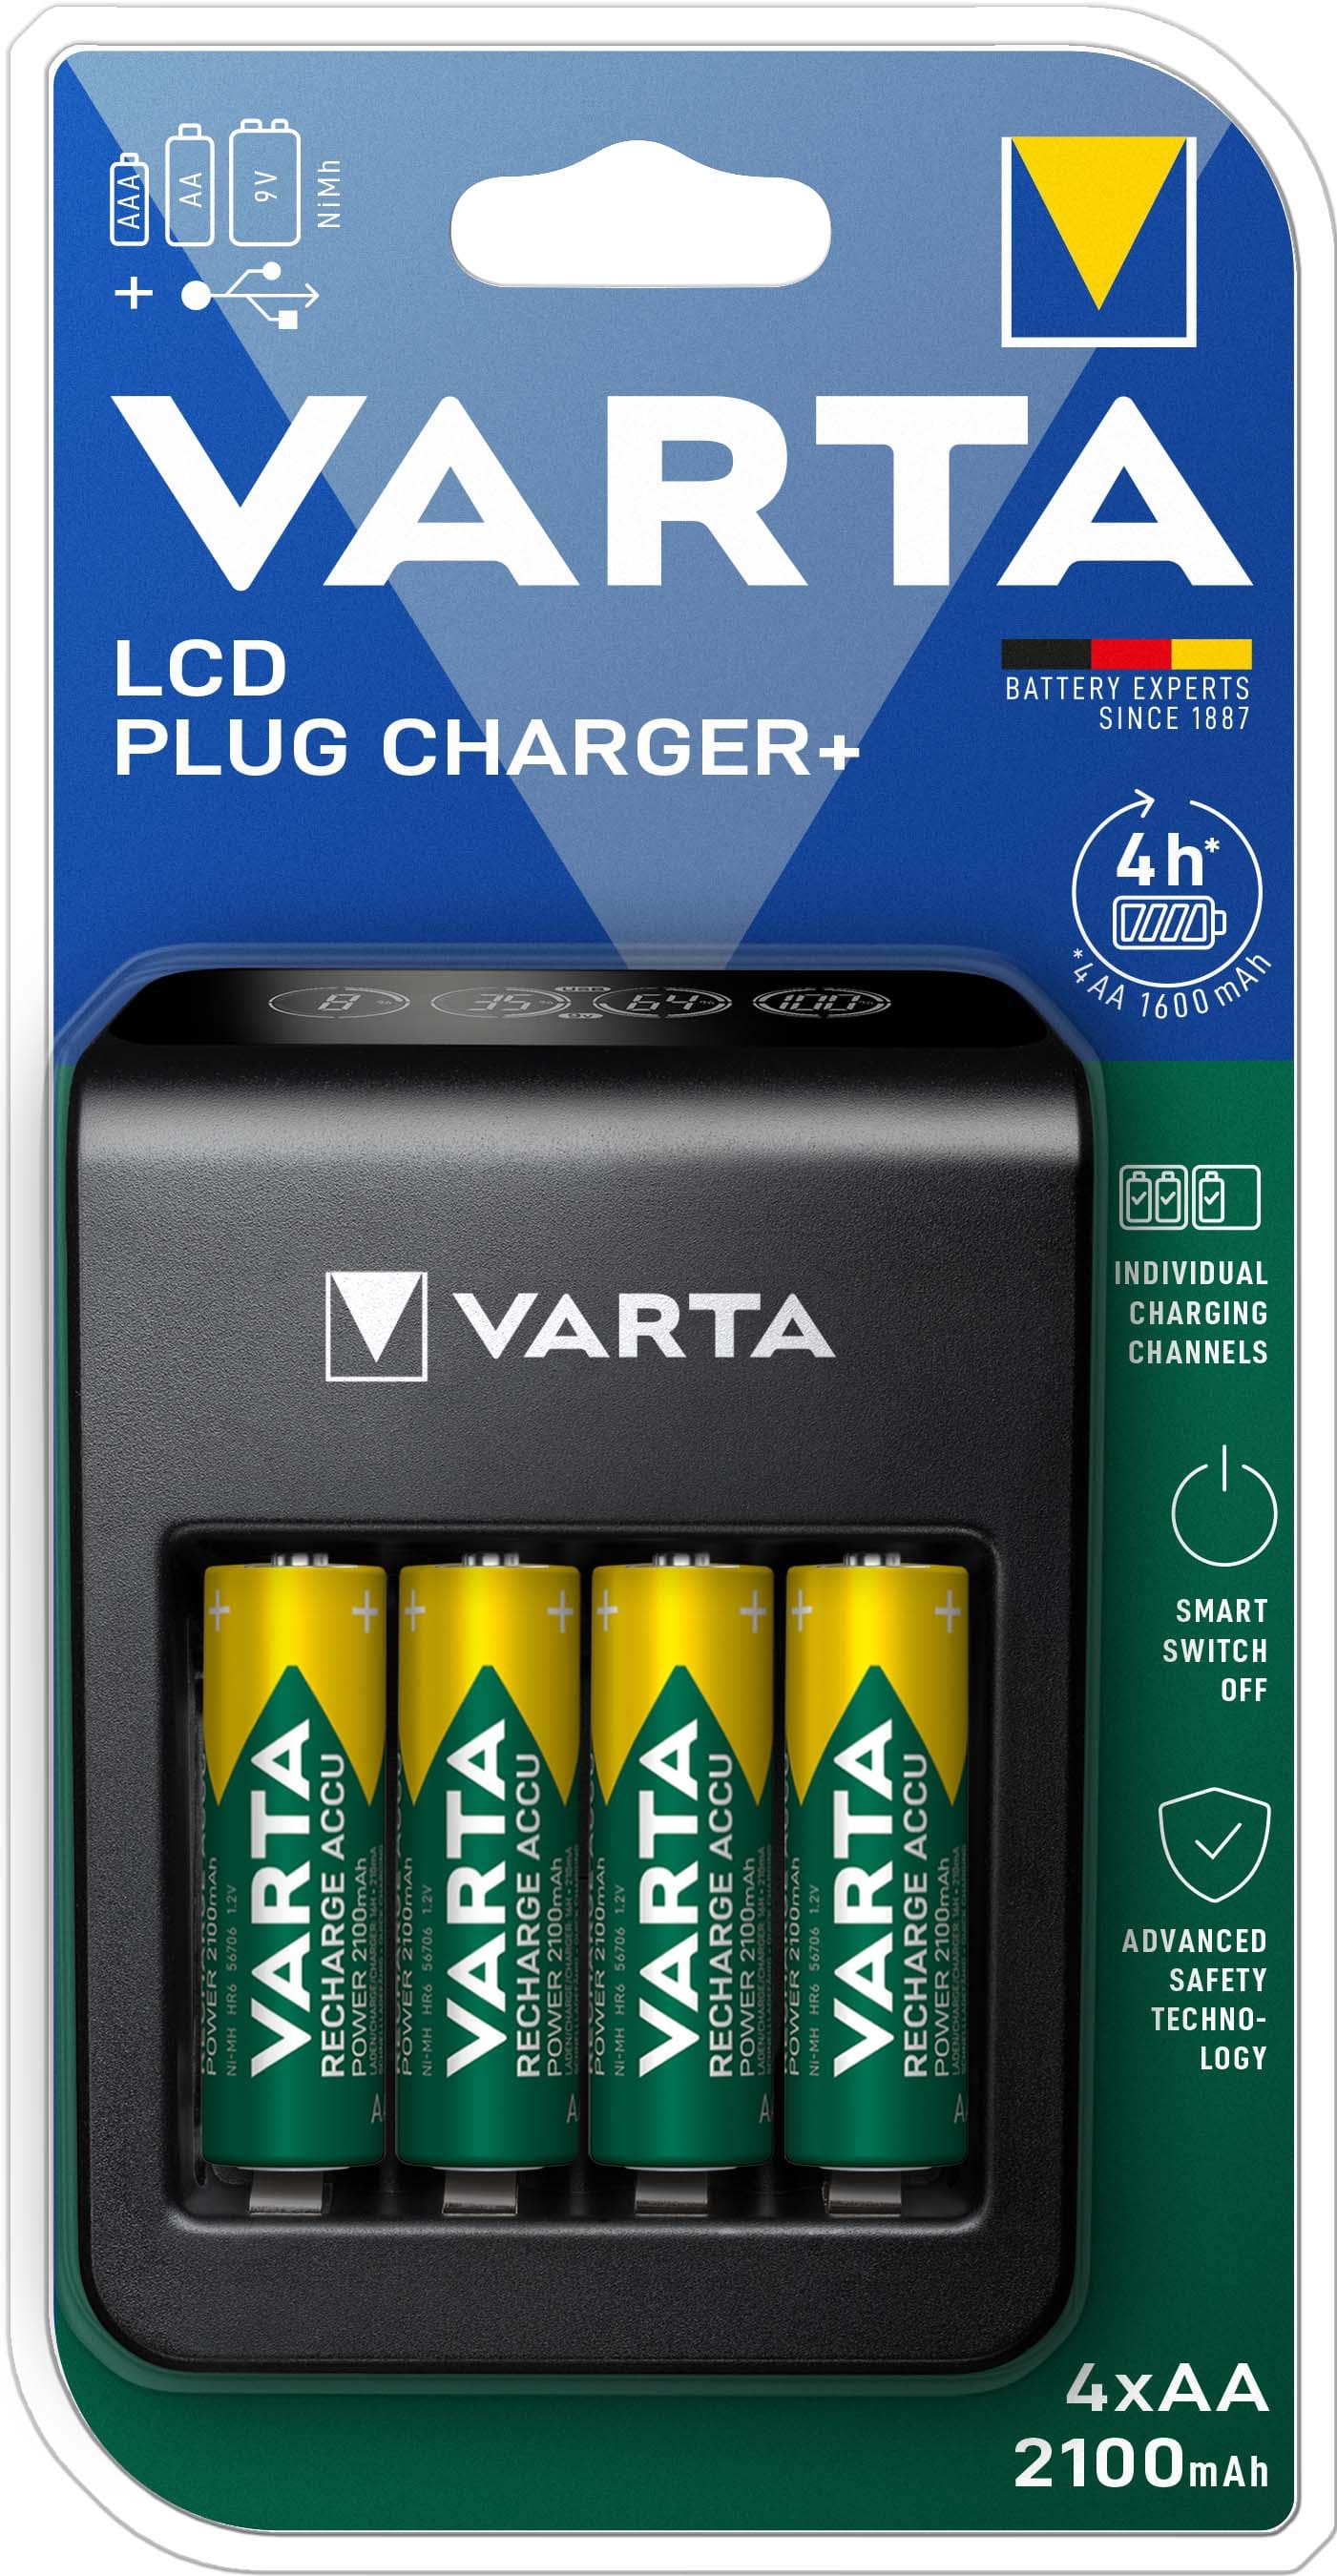 Varta 57687101441 LCD Plug Charger+ inkl. 4x AA 2100 mAh